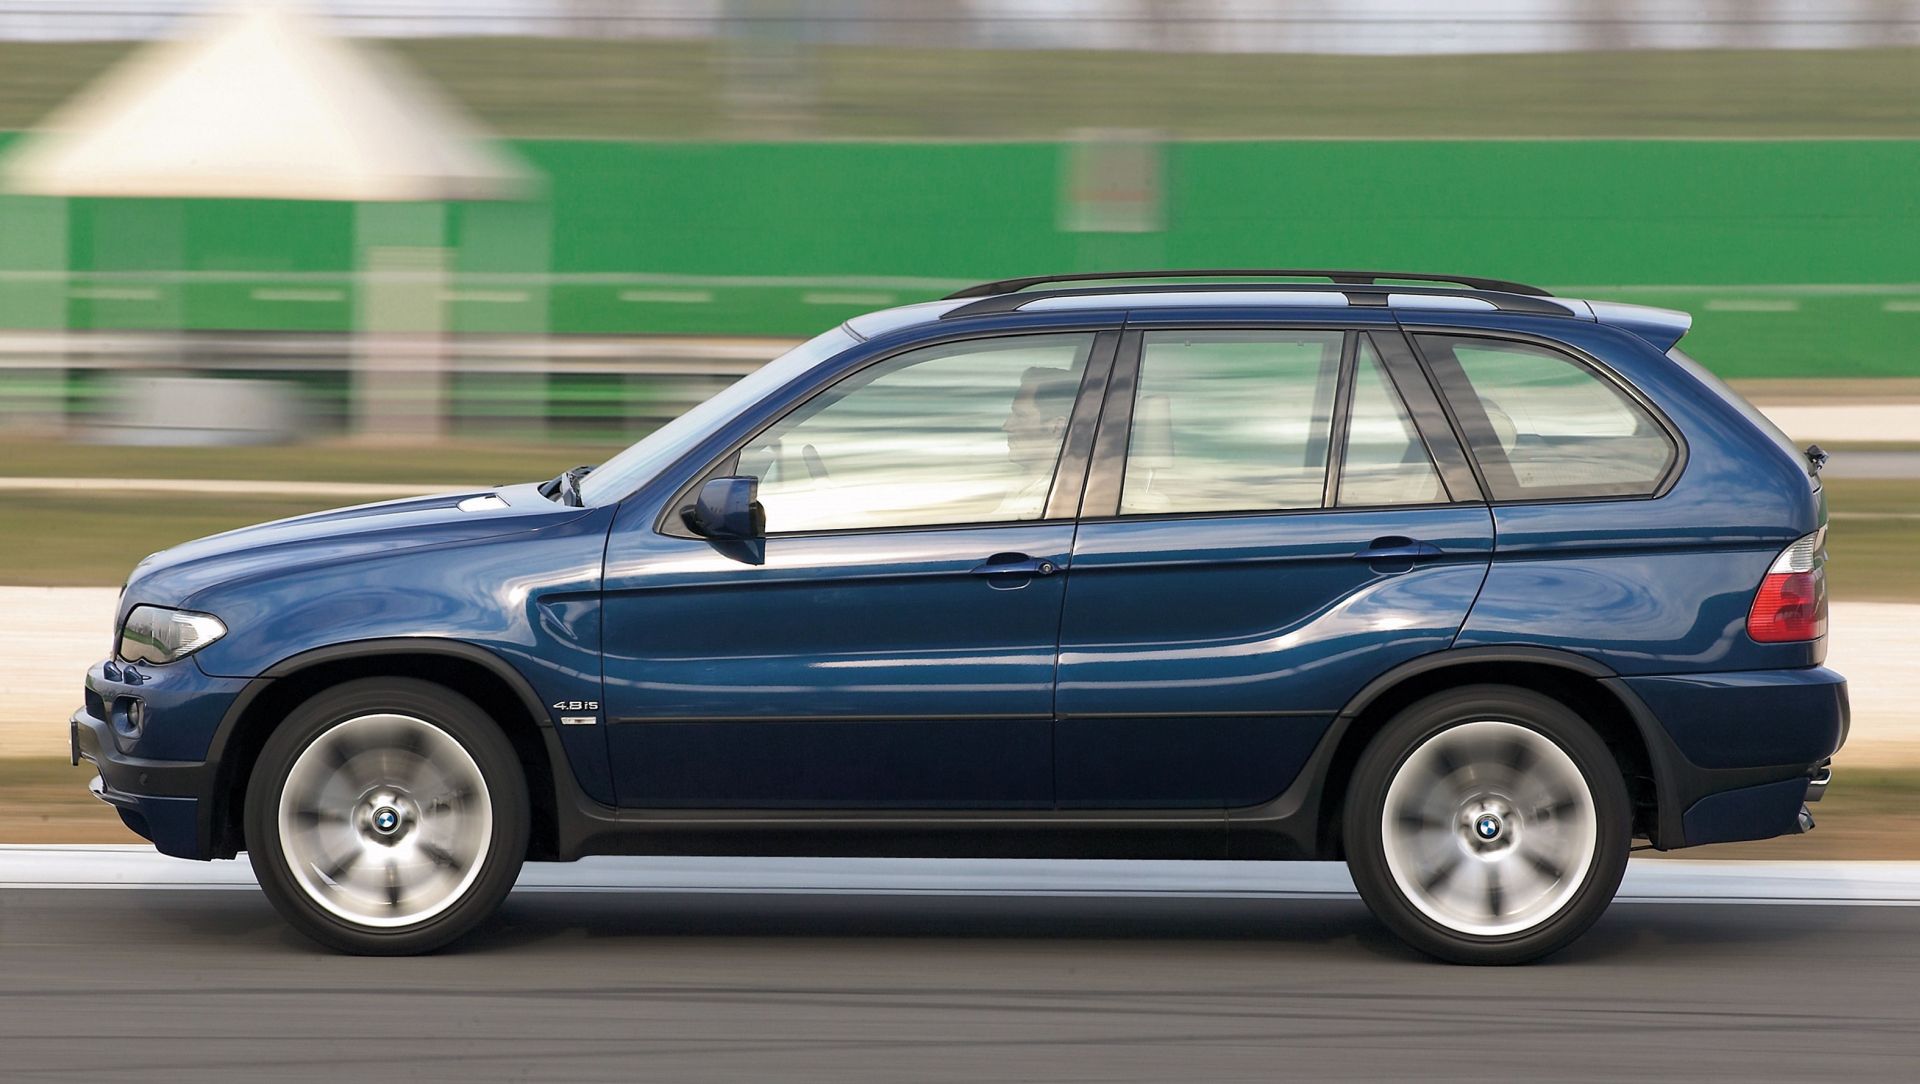 BMW X5 (E53) - Wikipedia